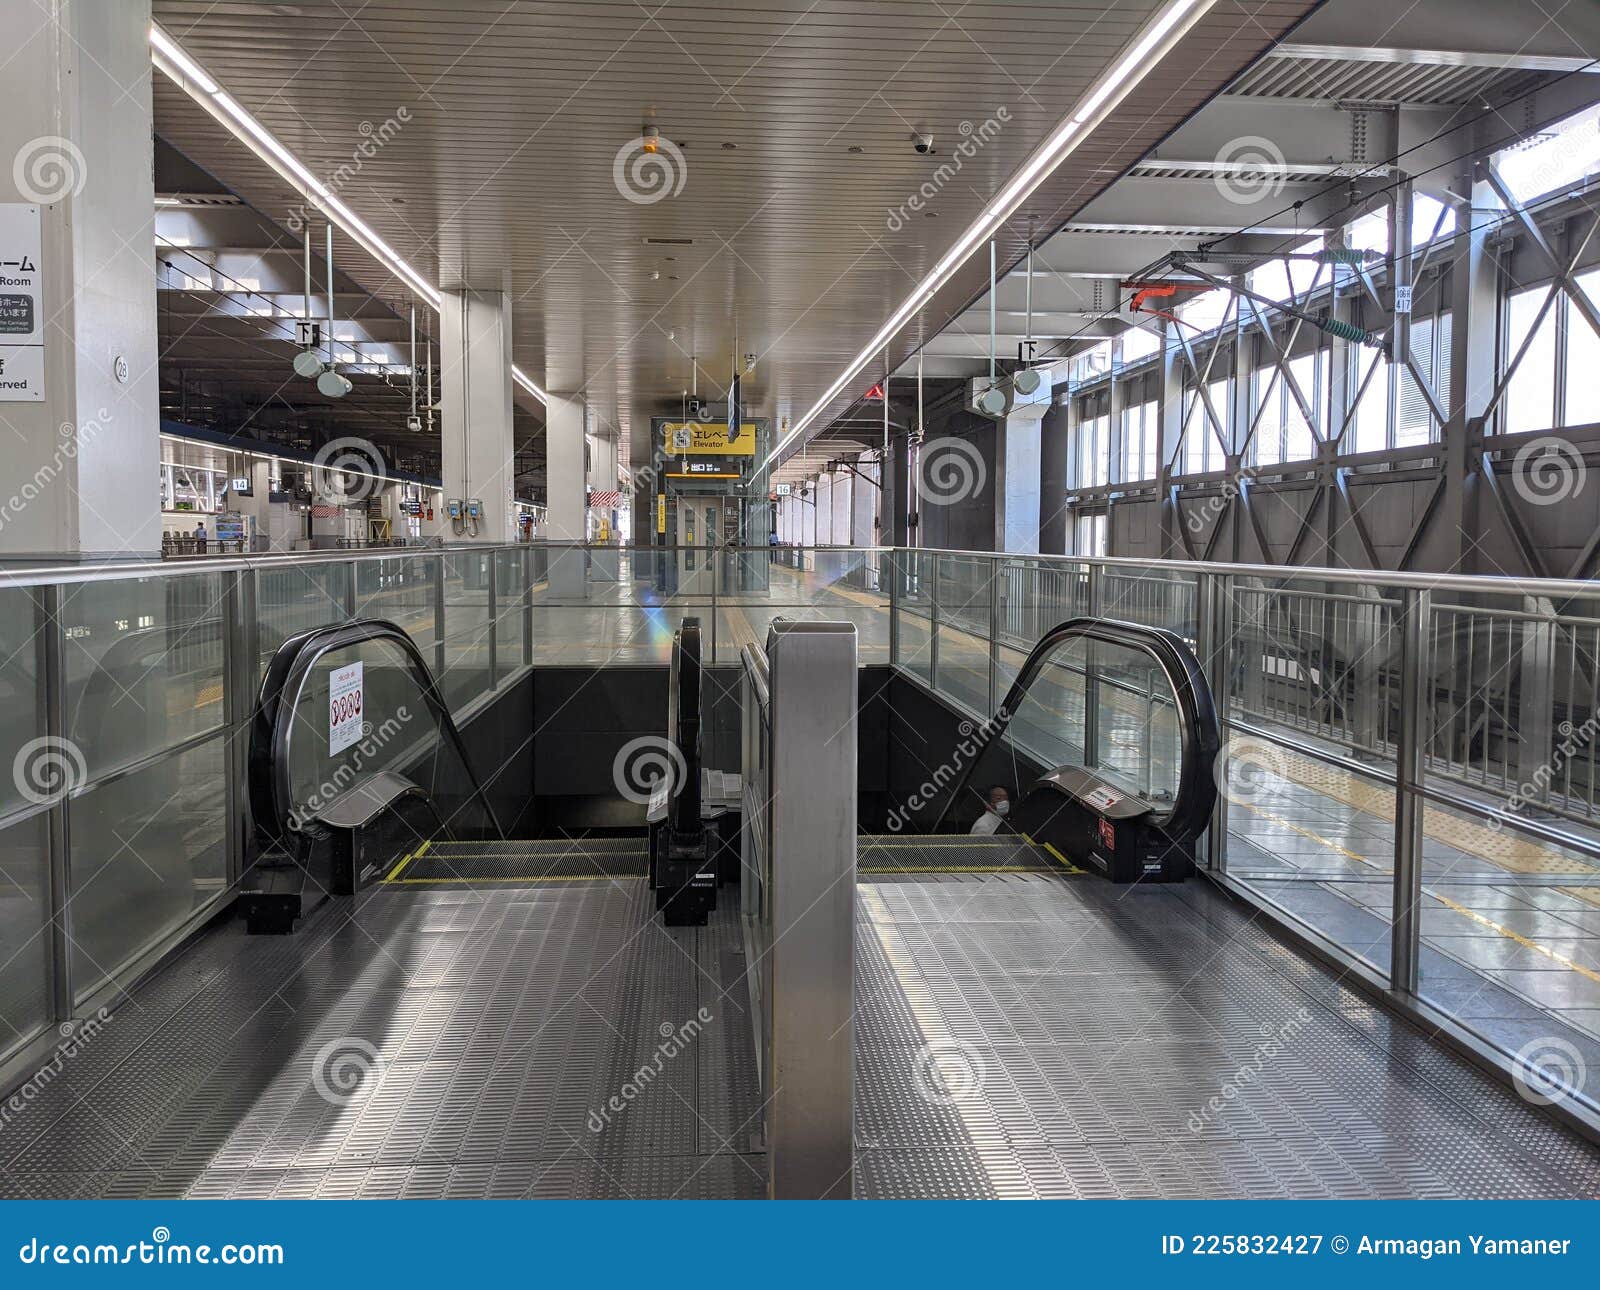 Escalator in a Japanese Railroad Station Stock Image - Image of subway ...